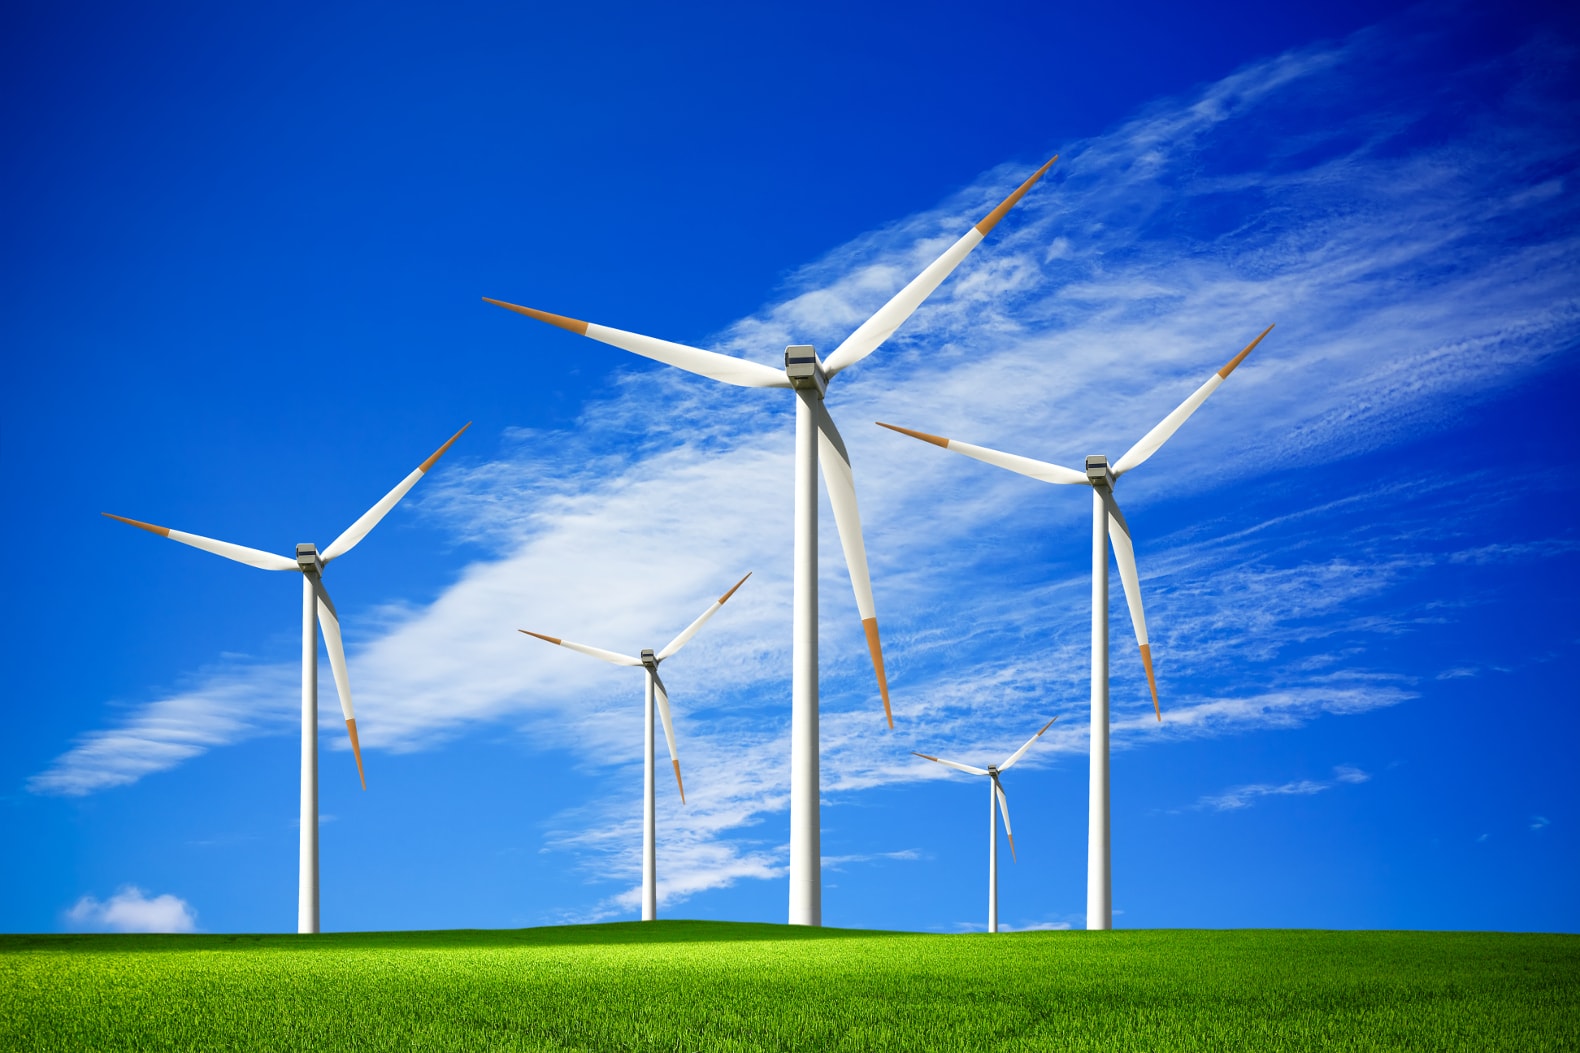 Nike Wind Farm Investment Texas Renewable Energy 100 percent 2018